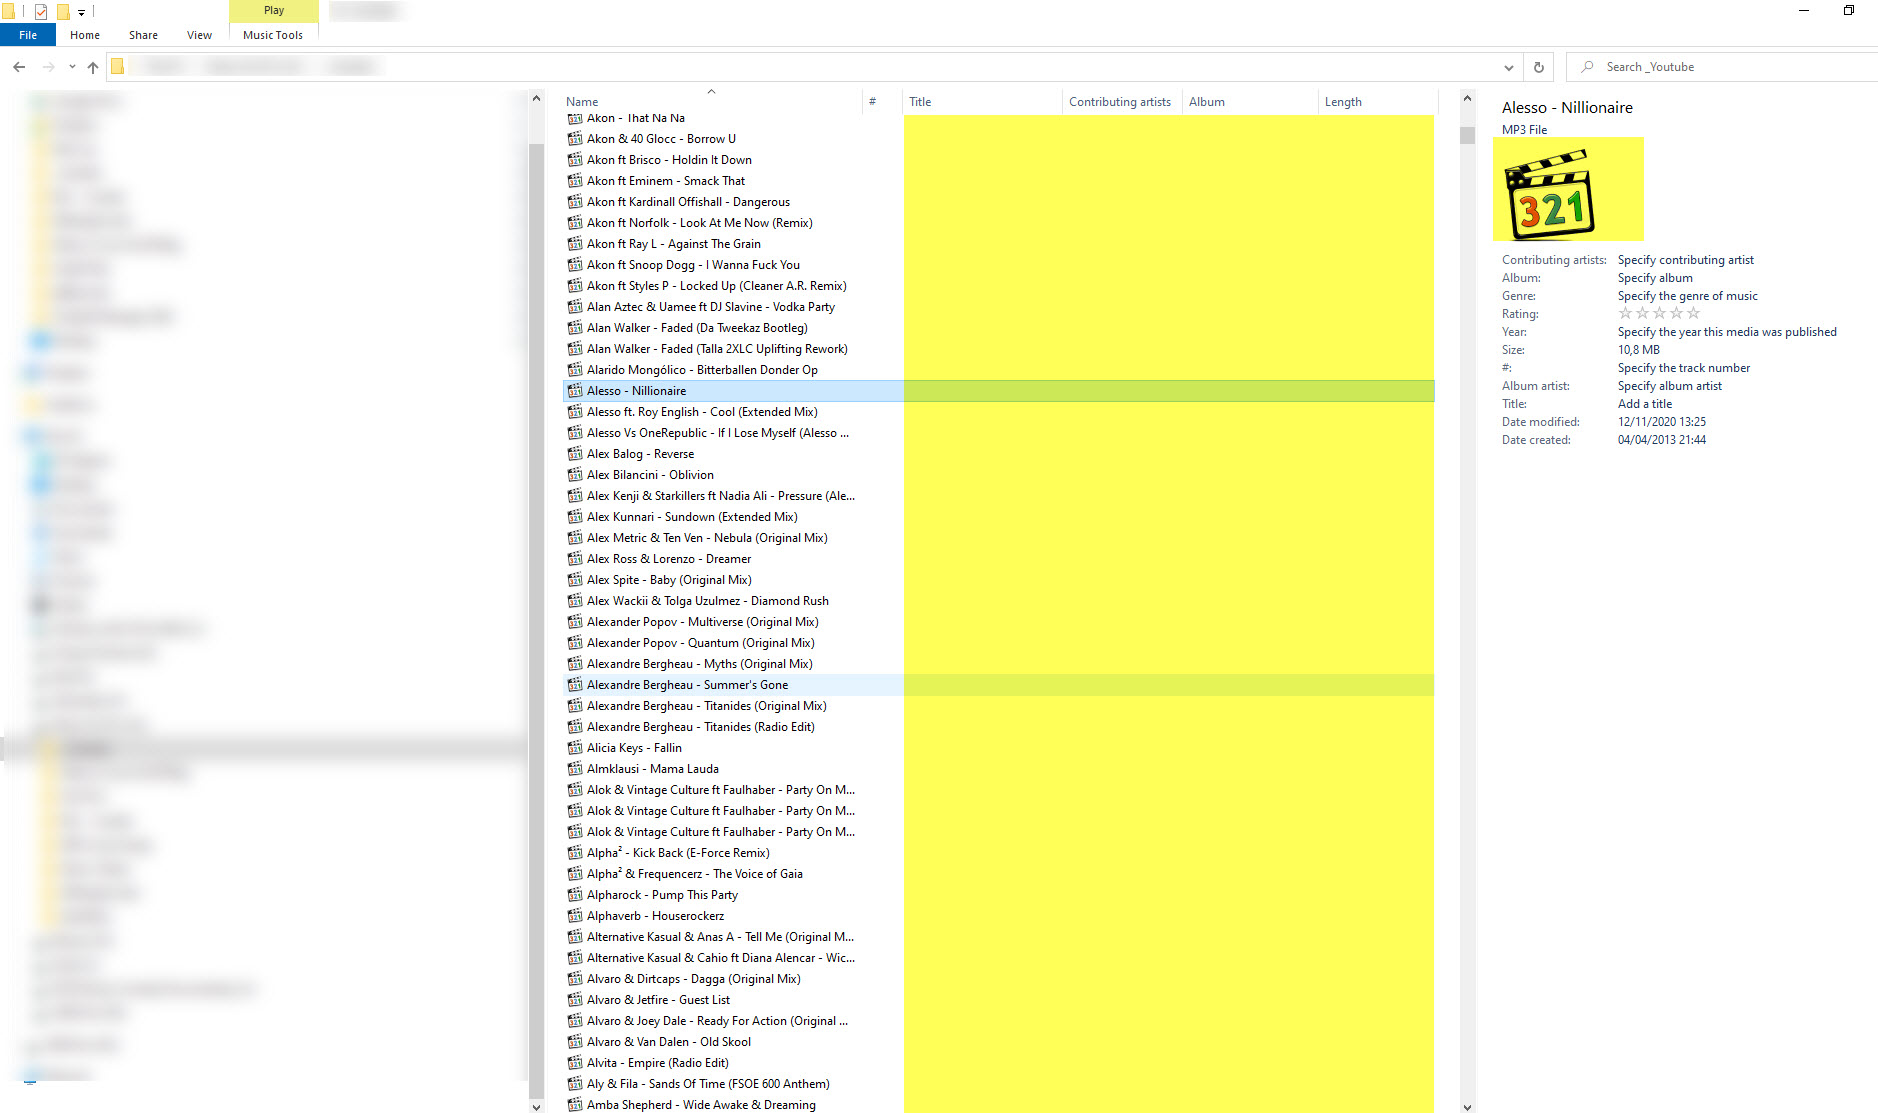 [SOLVED] Windows 10 Explorer - No thumbnails and no data like 'lenght' for MP3 / MP4 / PDF f70ef68e-5974-4961-ba1d-5d65ff9b3e13?upload=true.jpg